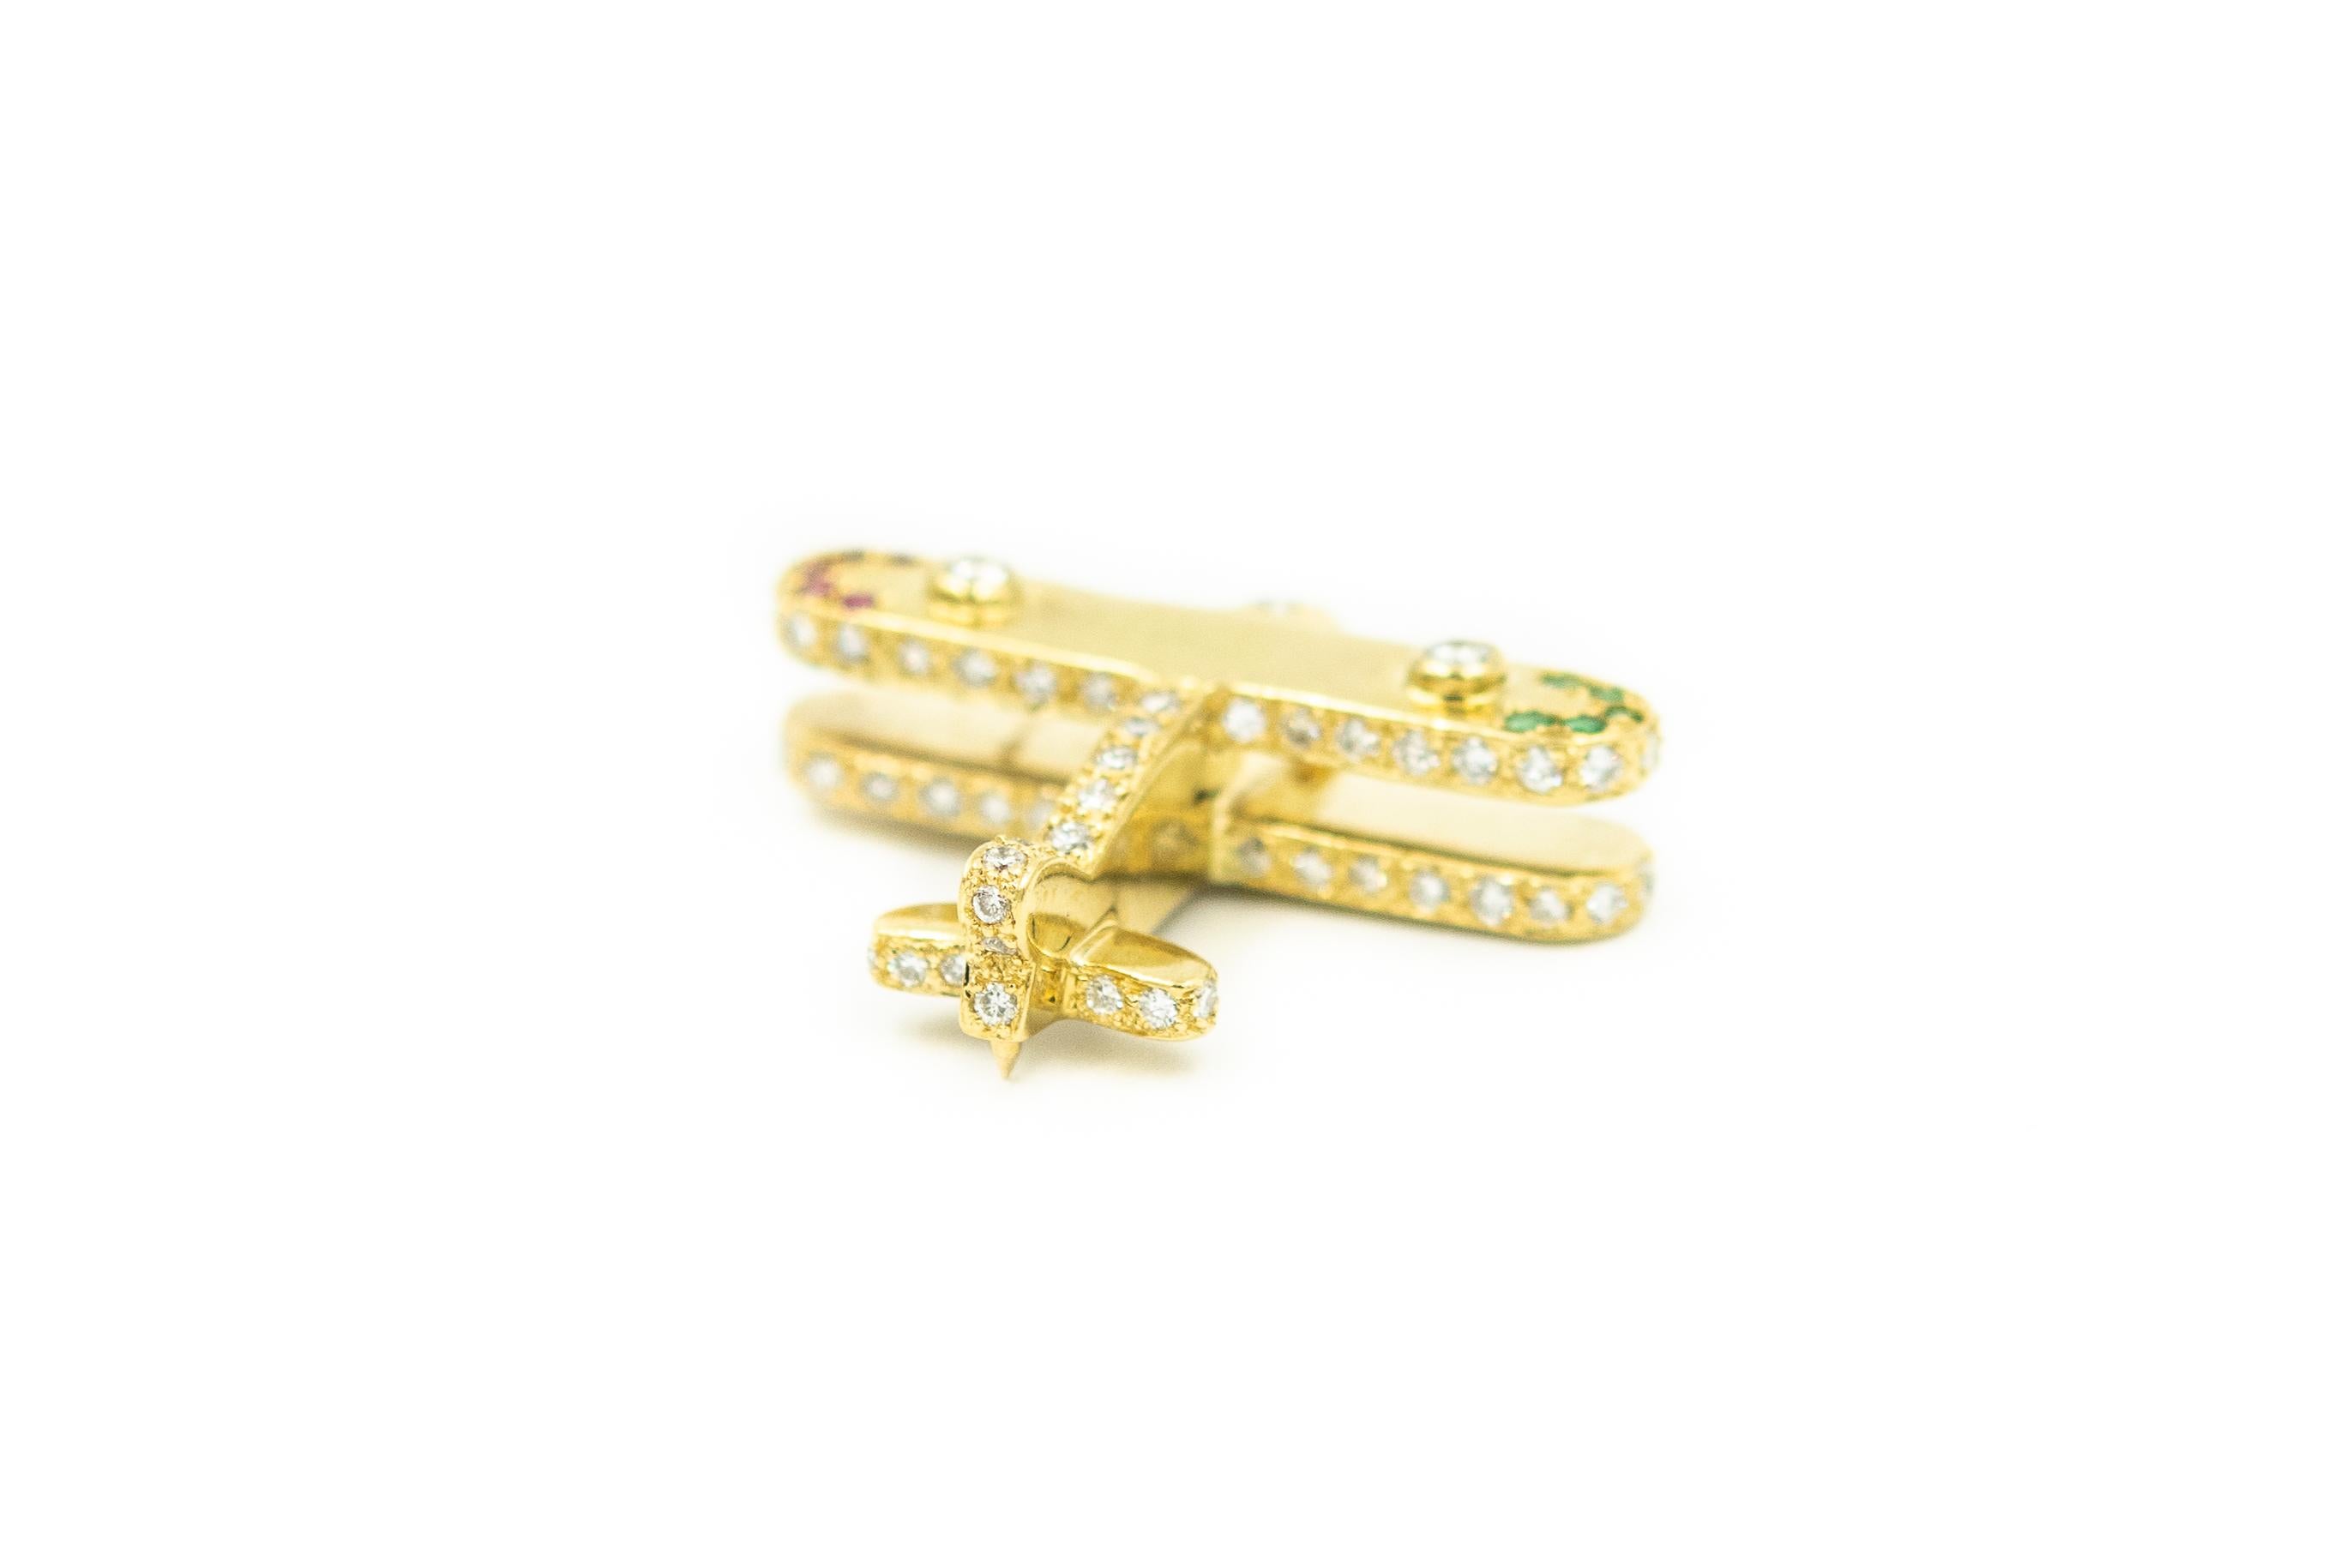 Round Cut Diamond Ruby Emerald Jeweled Airplane Plane Yellow Gold Necklace Pendant Charm